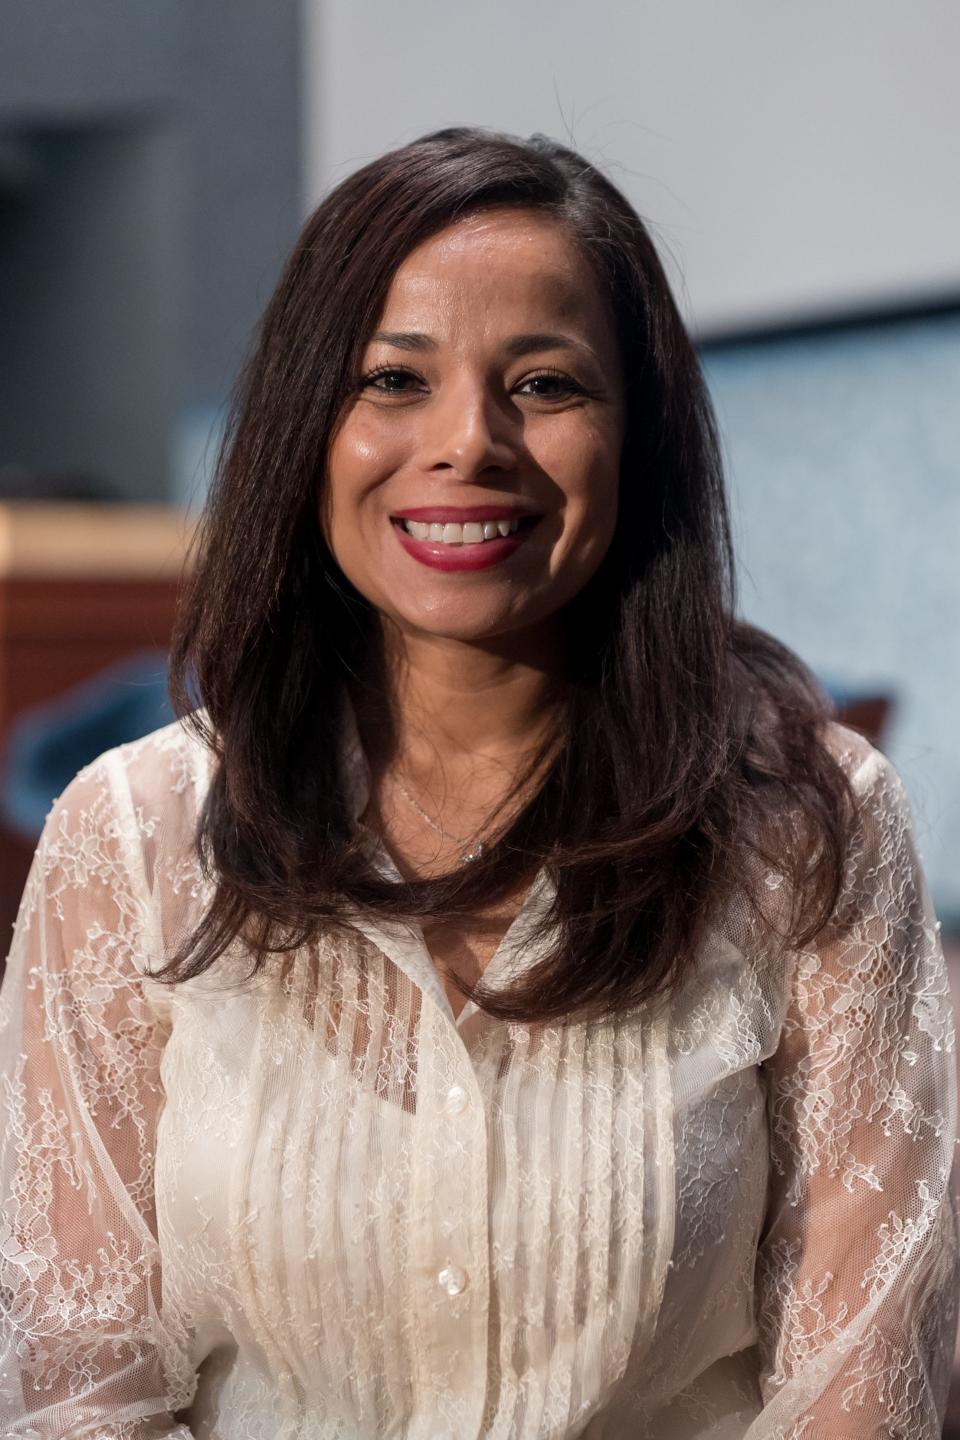 State Rep. Claudia Ordaz Perez, D-El Paso